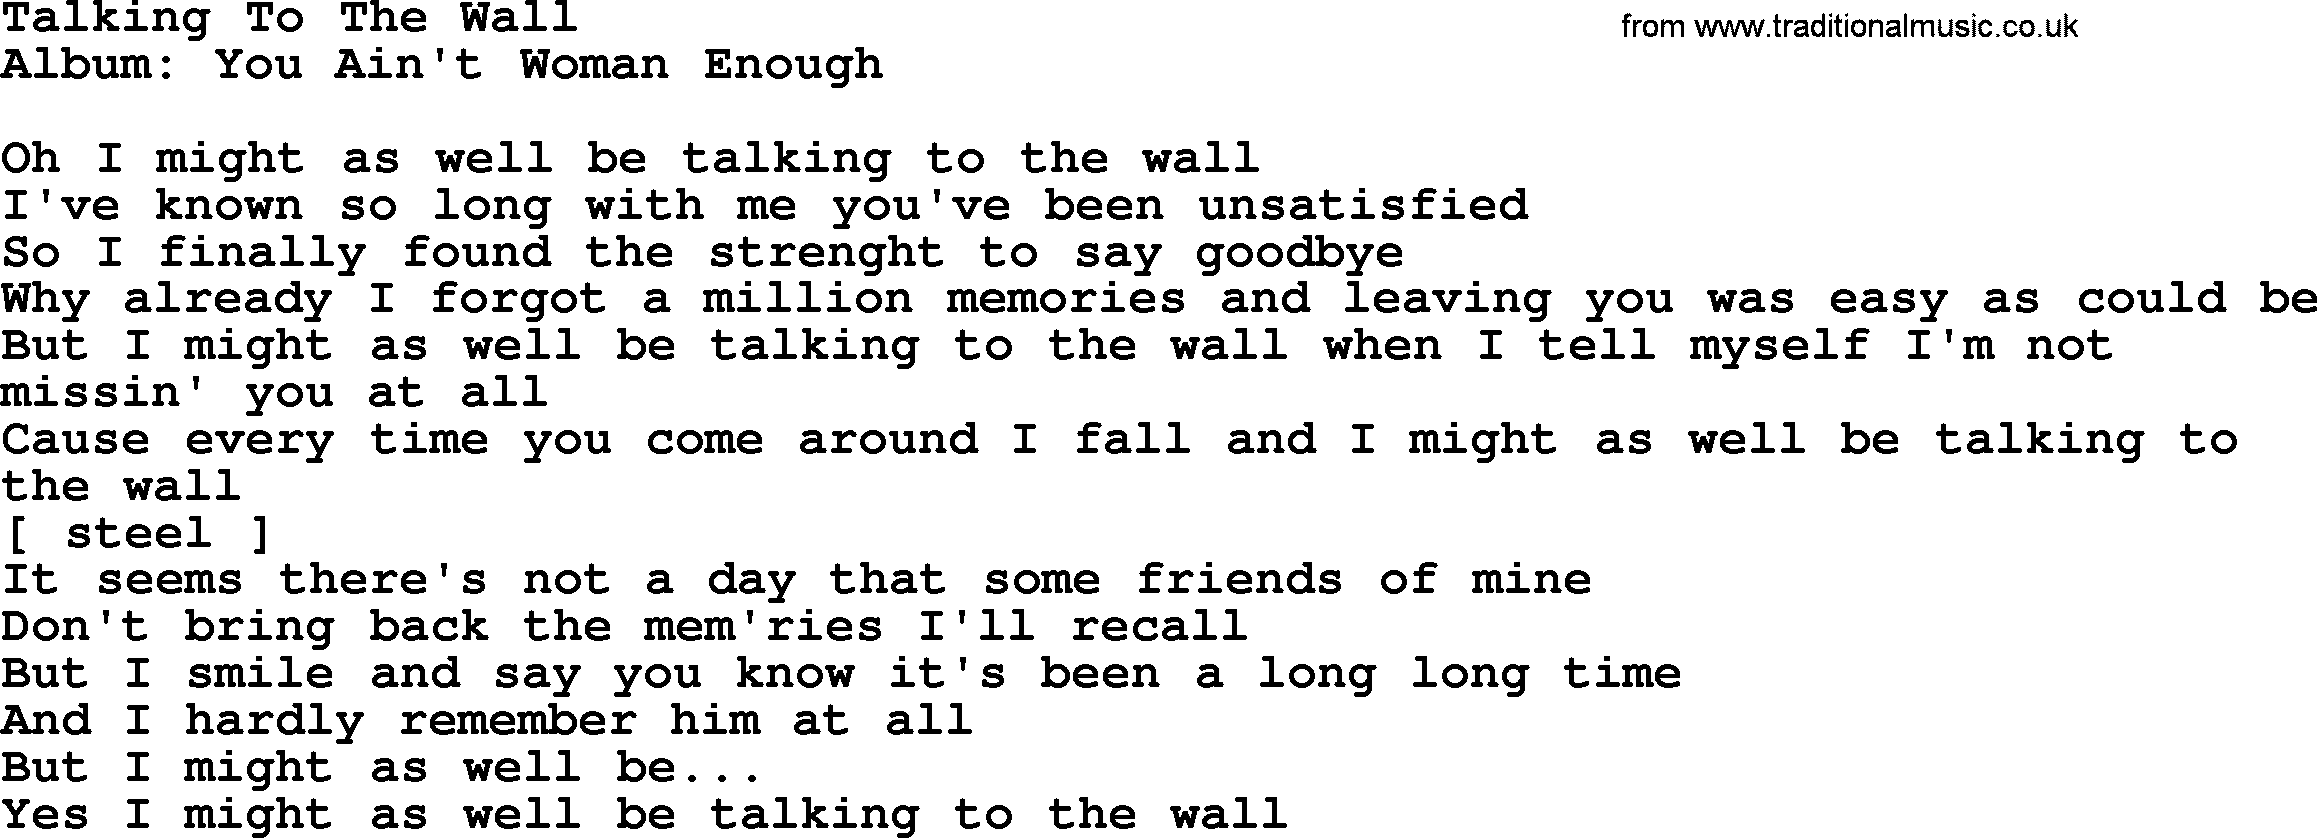 Loretta Lynn song: Talking To The Wall lyrics